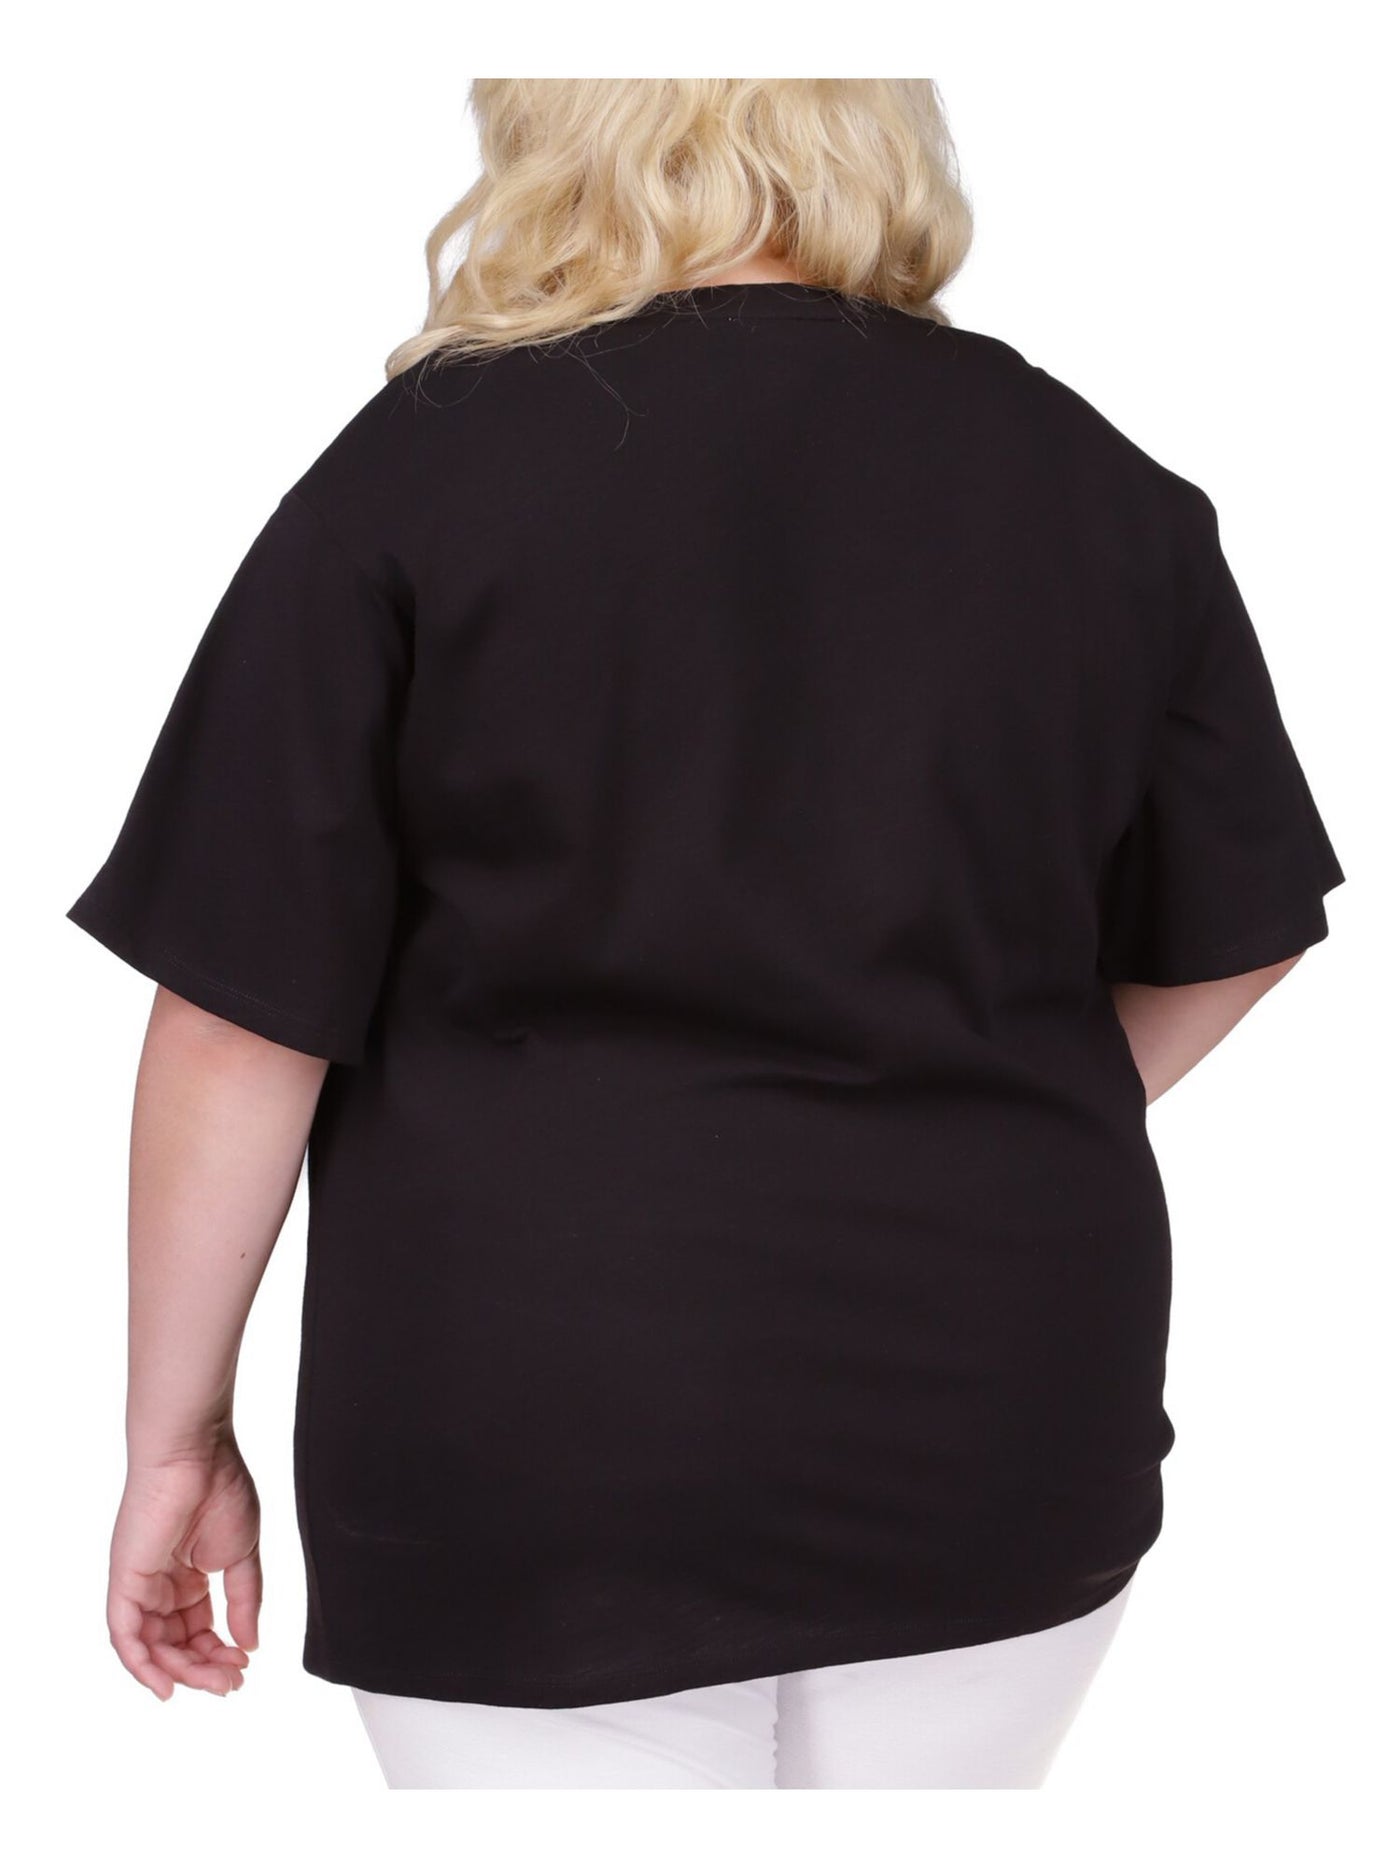 MICHAEL KORS Womens Black Elbow Sleeve Crew Neck T-Shirt Plus 0X